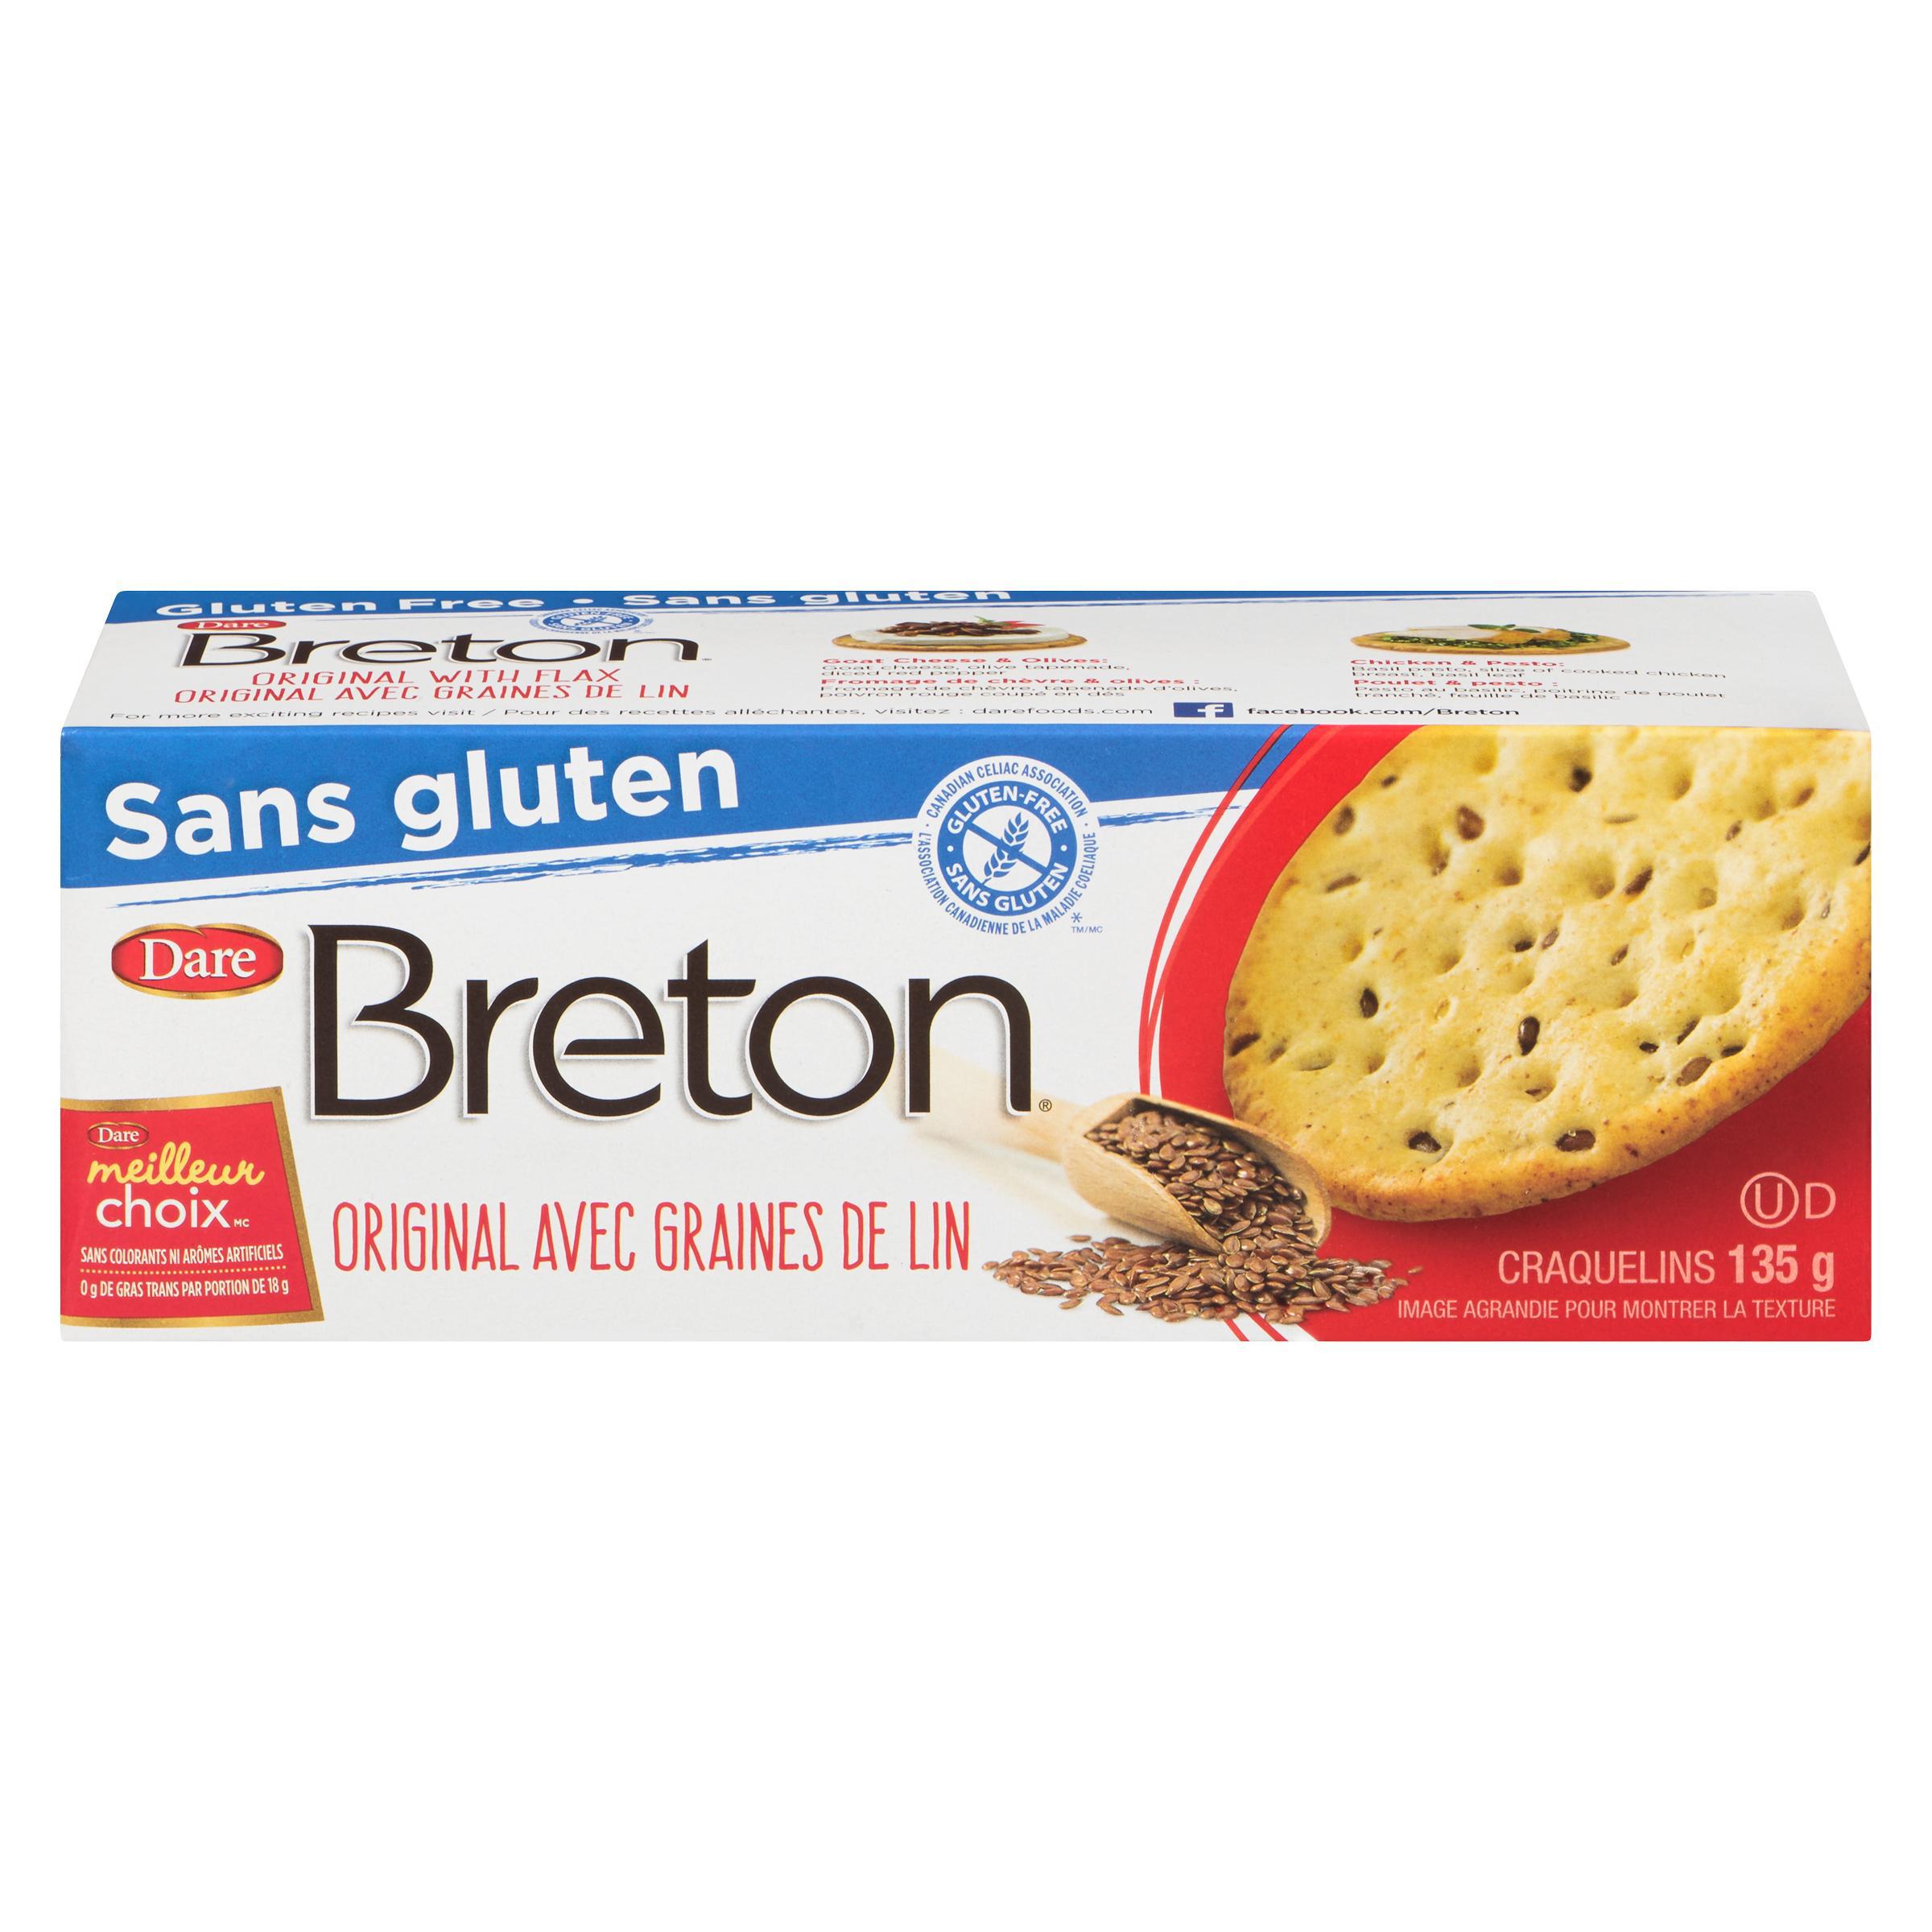 Breton Gluten Free Original with Flax Crackers, Dare, 135 g